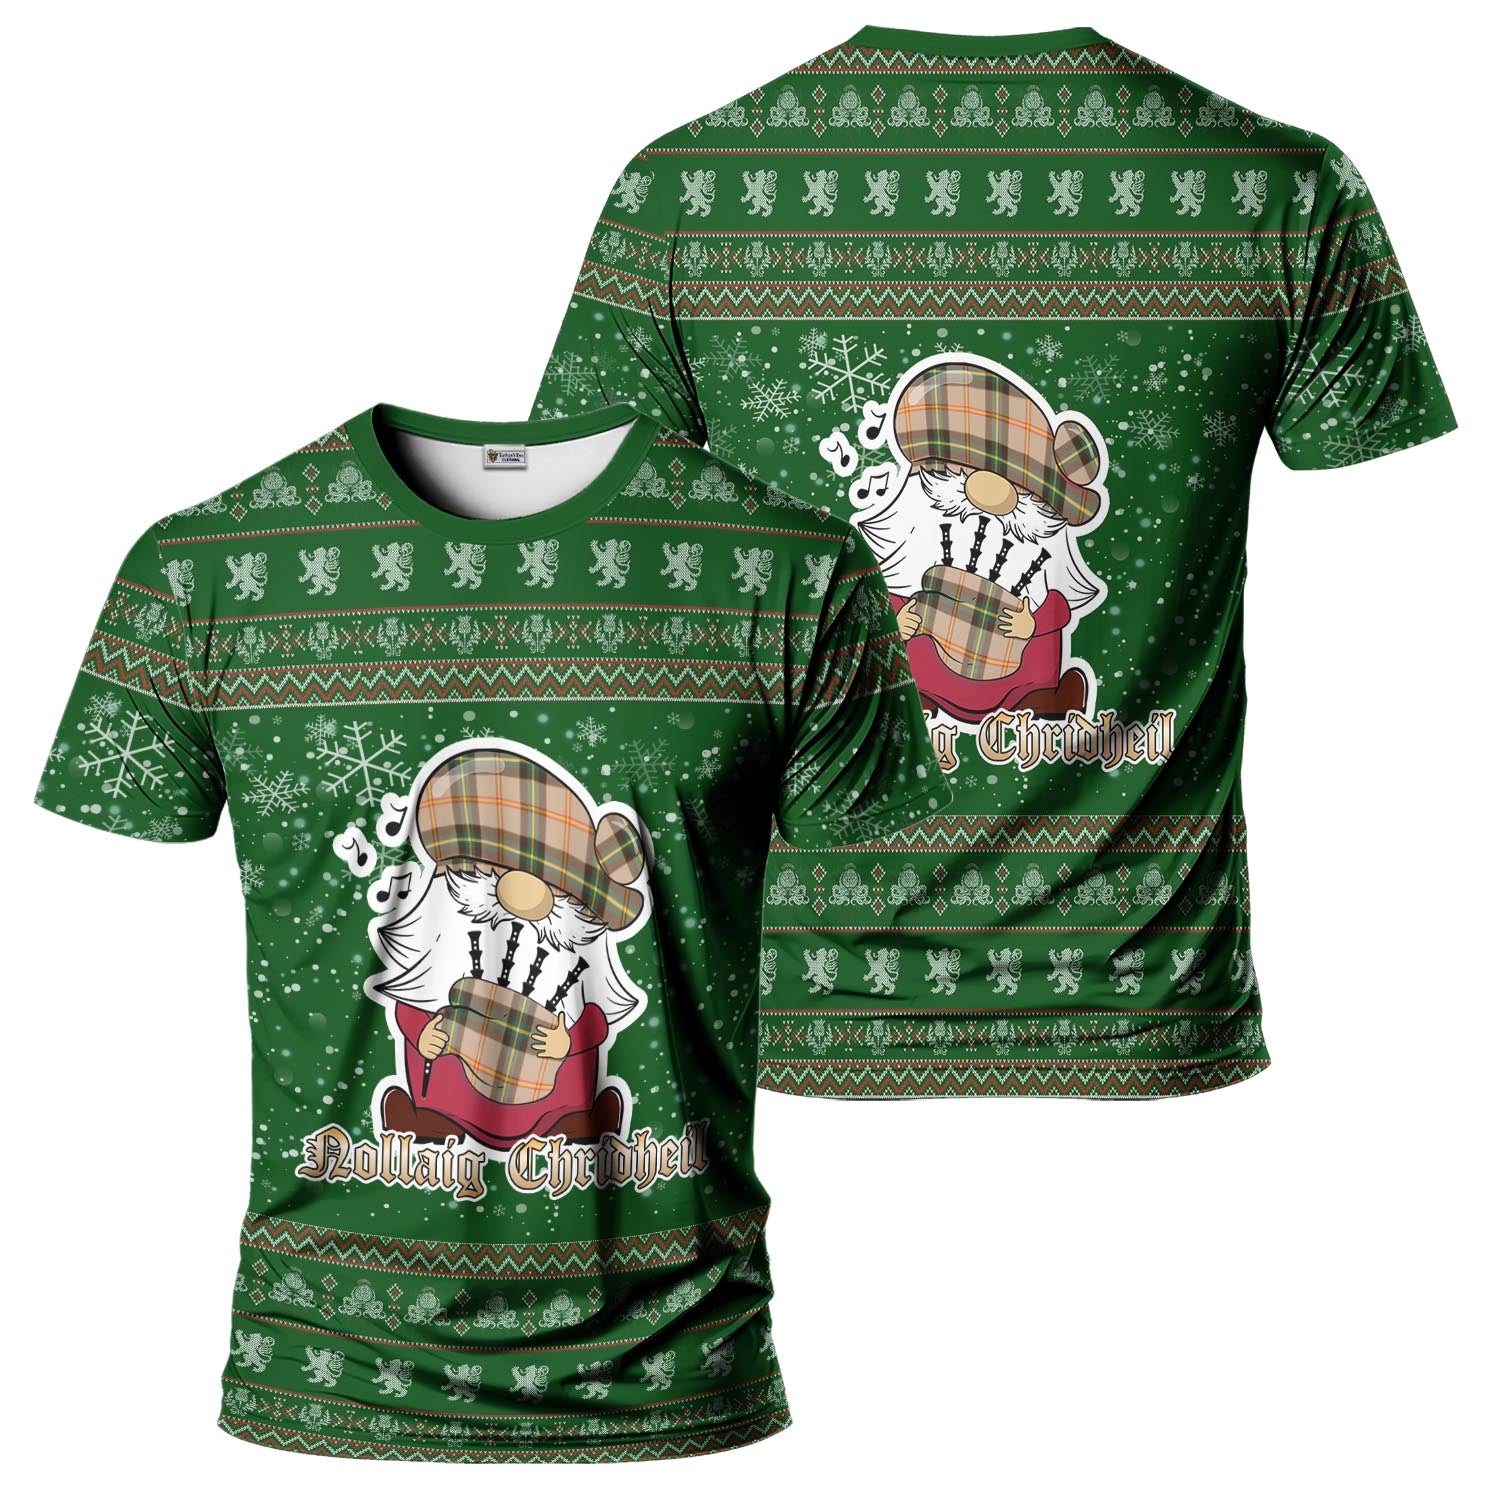 Saskatchewan Province Canada Clan Christmas Family T-Shirt with Funny Gnome Playing Bagpipes Men's Shirt Green - Tartanvibesclothing